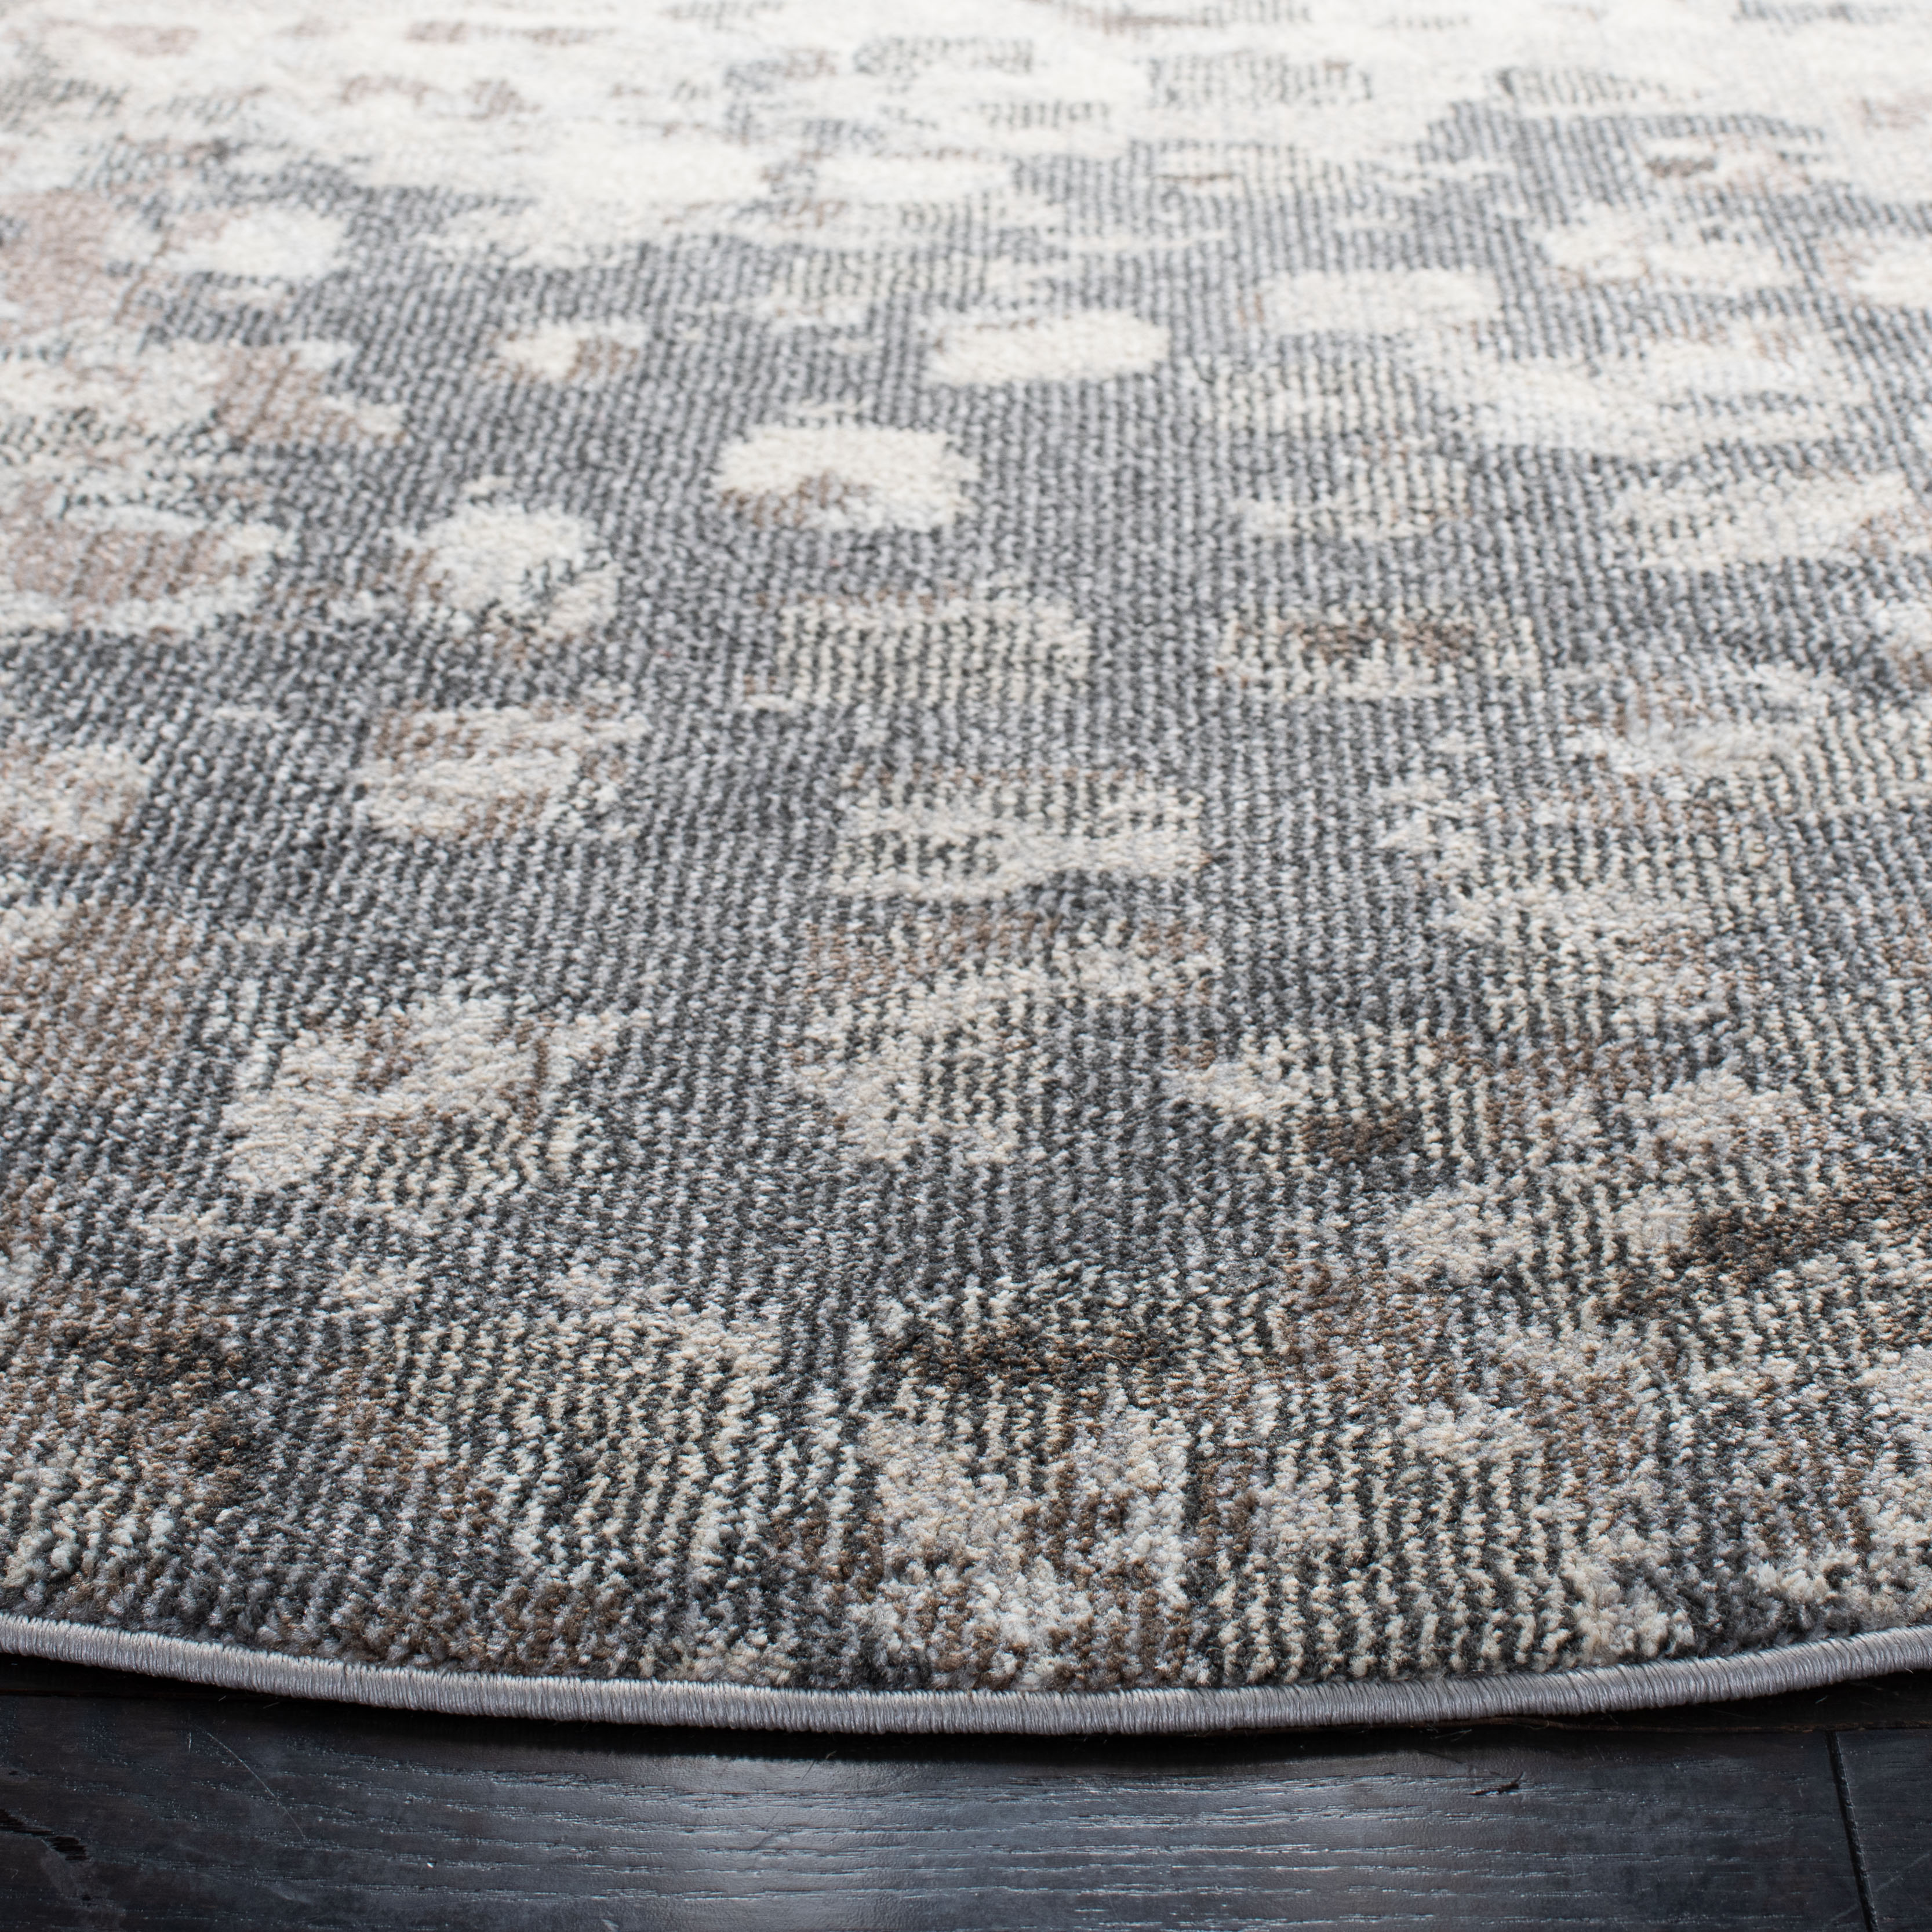 SAFAVIEH Madison Candelario Abstract Polka Dots Area Rug, Grey/Beige, 6'7" x 6'7" Round - image 4 of 8